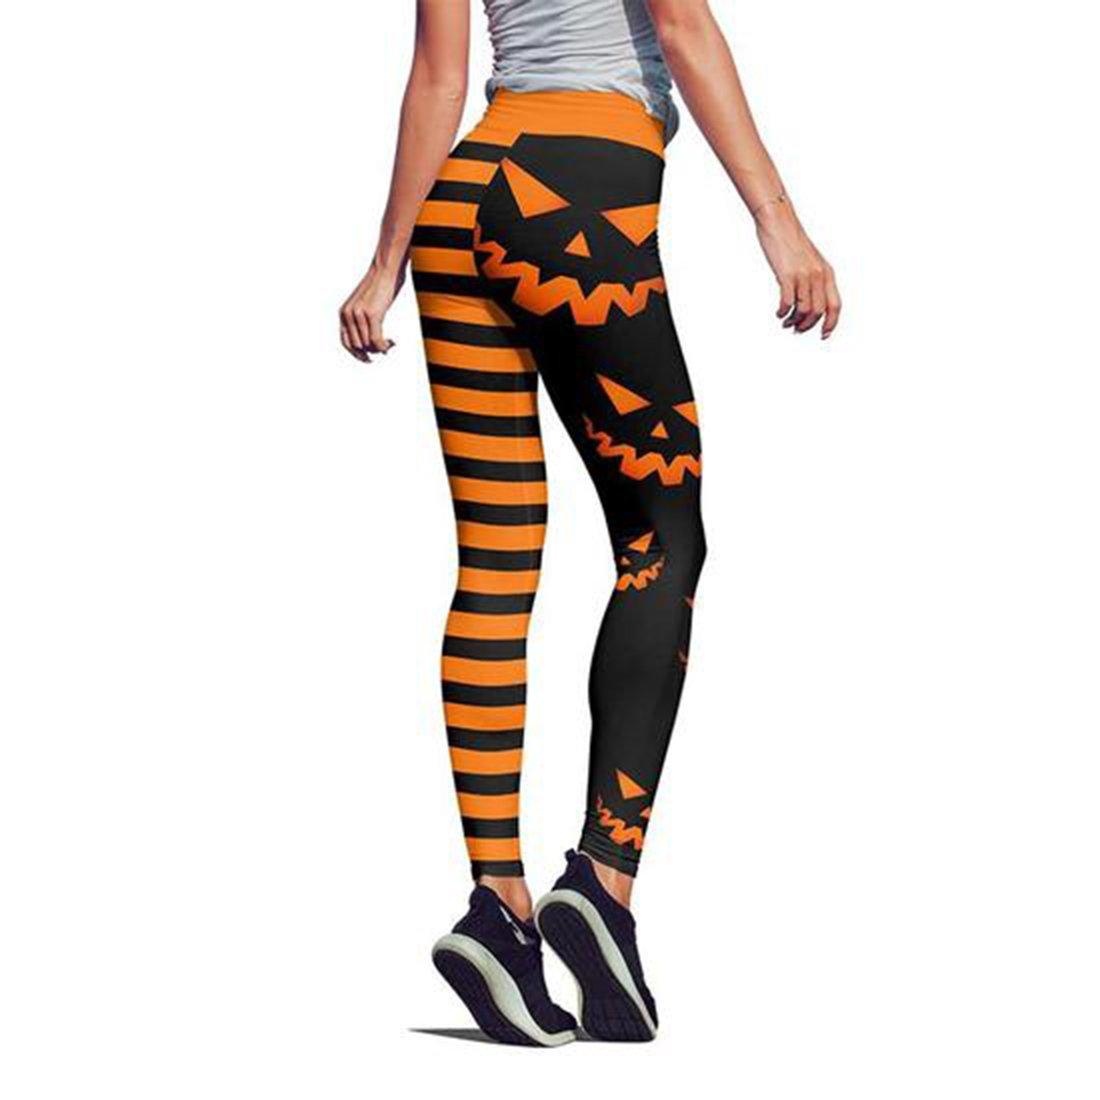 Pumpkin hallowstripes high waist legging orange - back